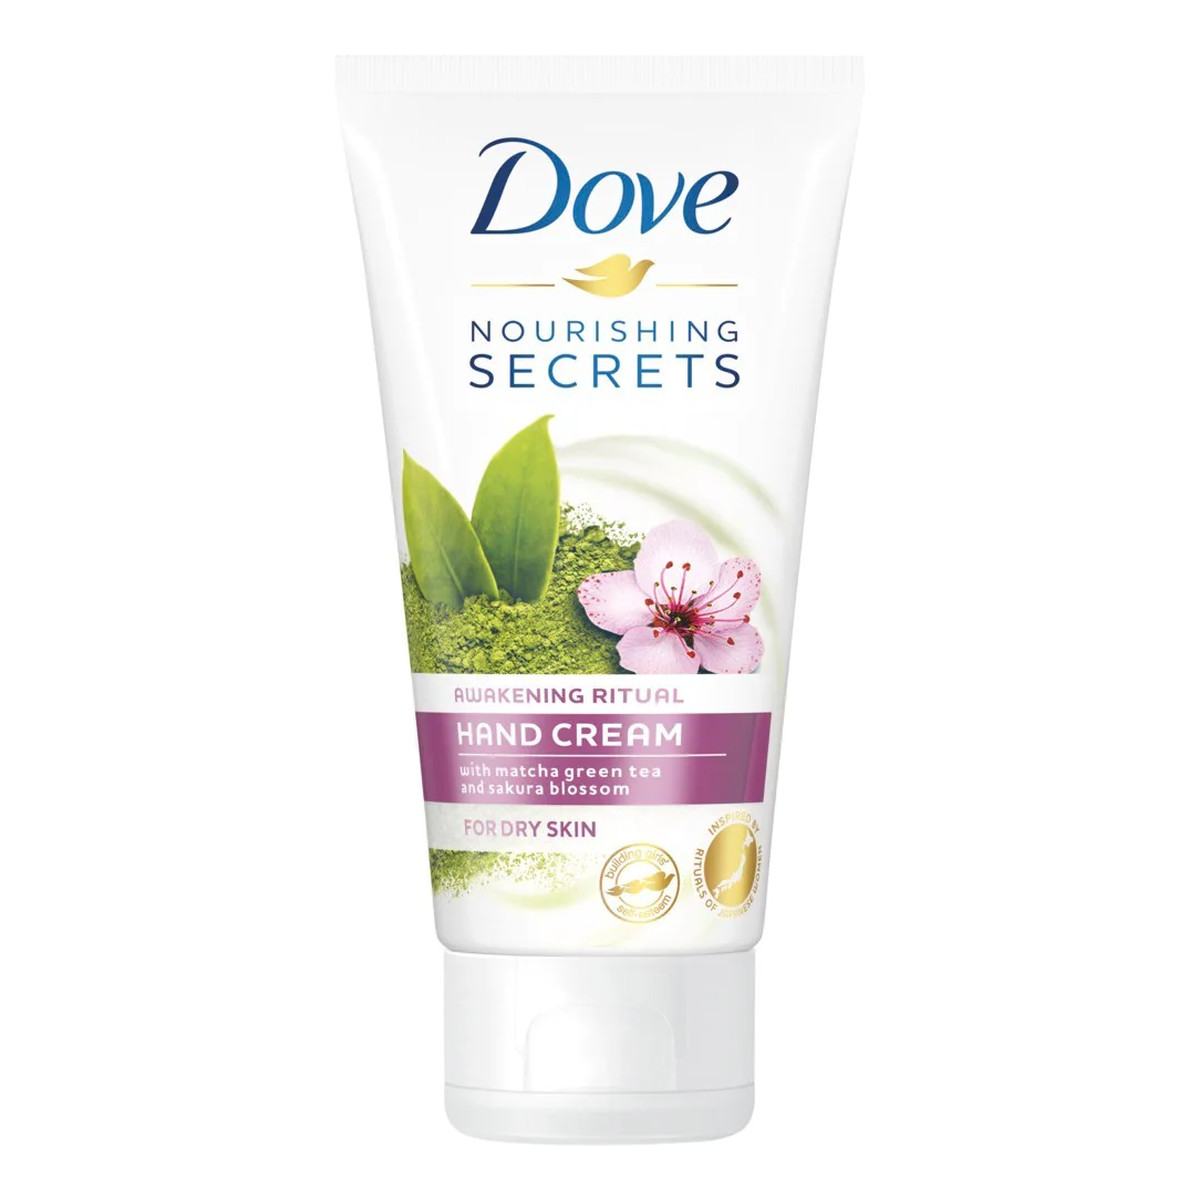 Dove Nourishing Secrets Awakening Ritual pobudzający krem do rąk Matcha Green Tea & Sakura Blossom 75ml